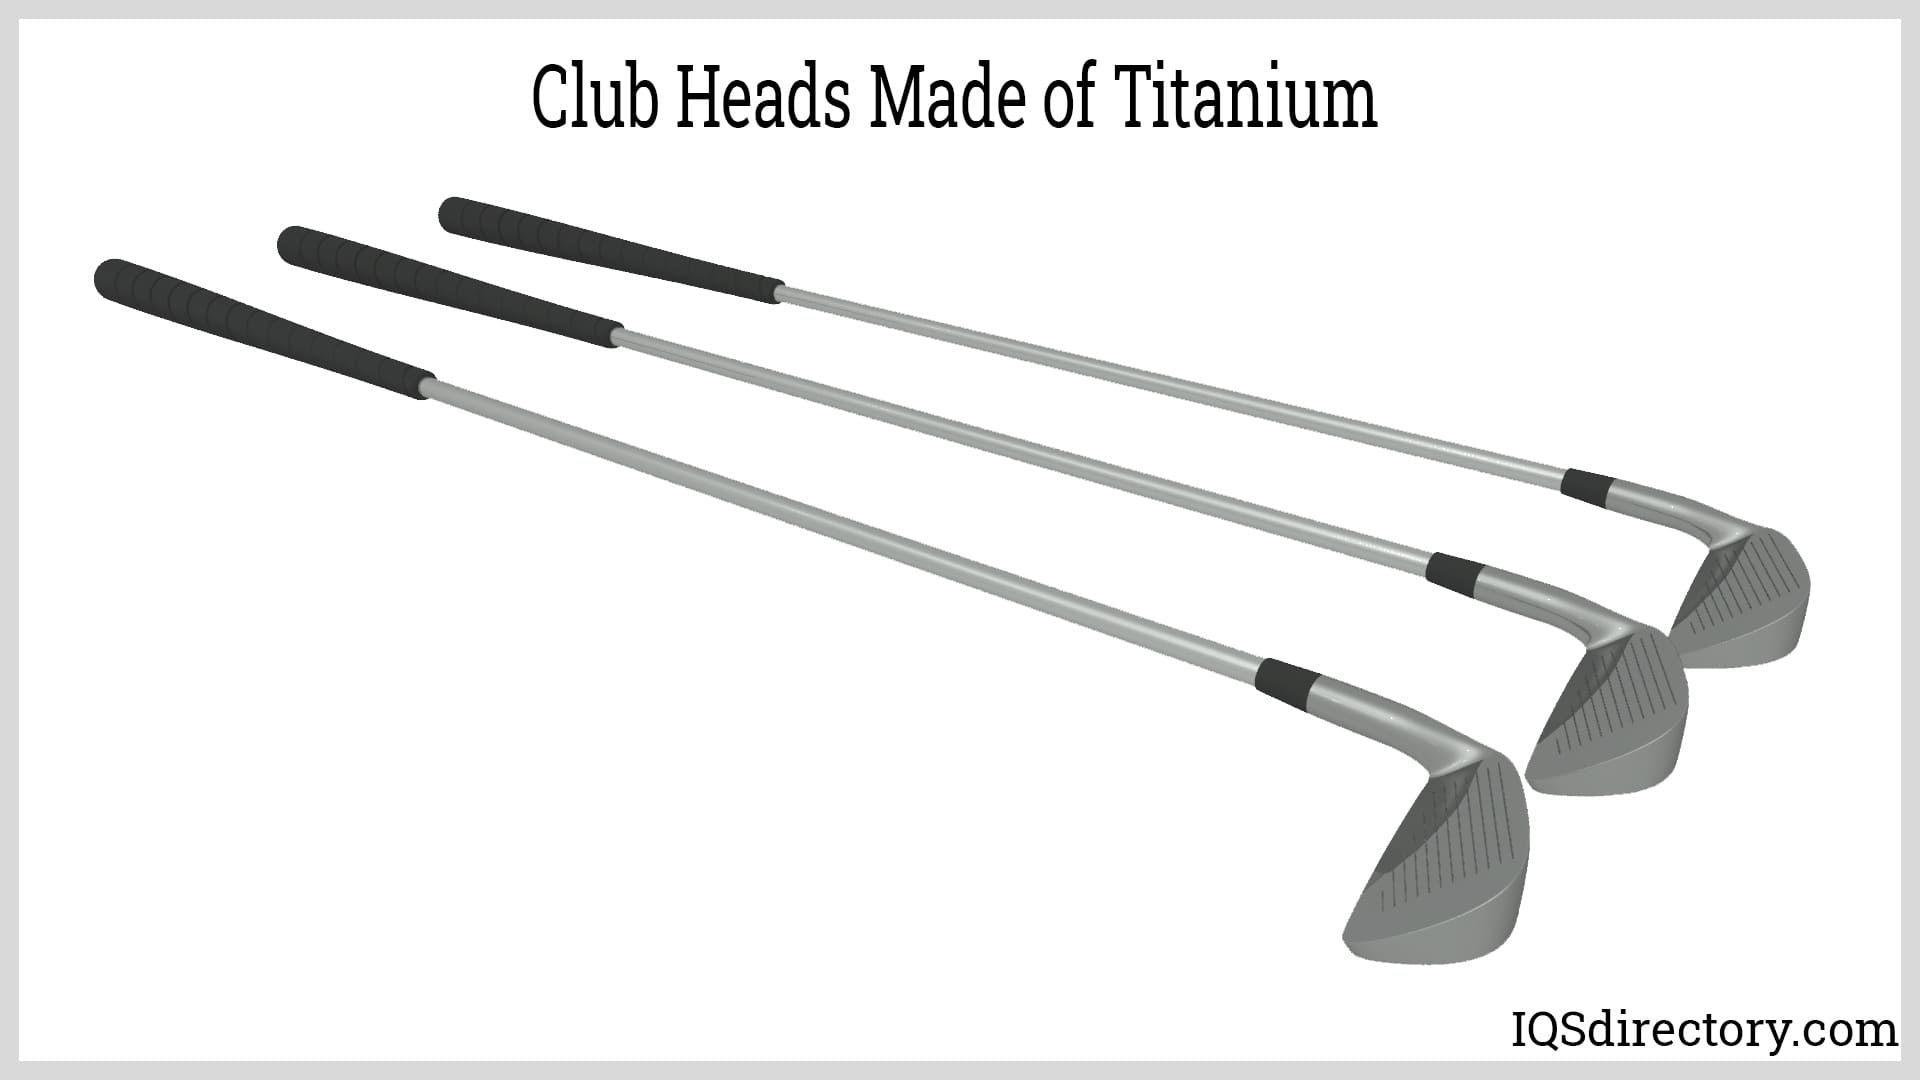 Club heads made of Titanium